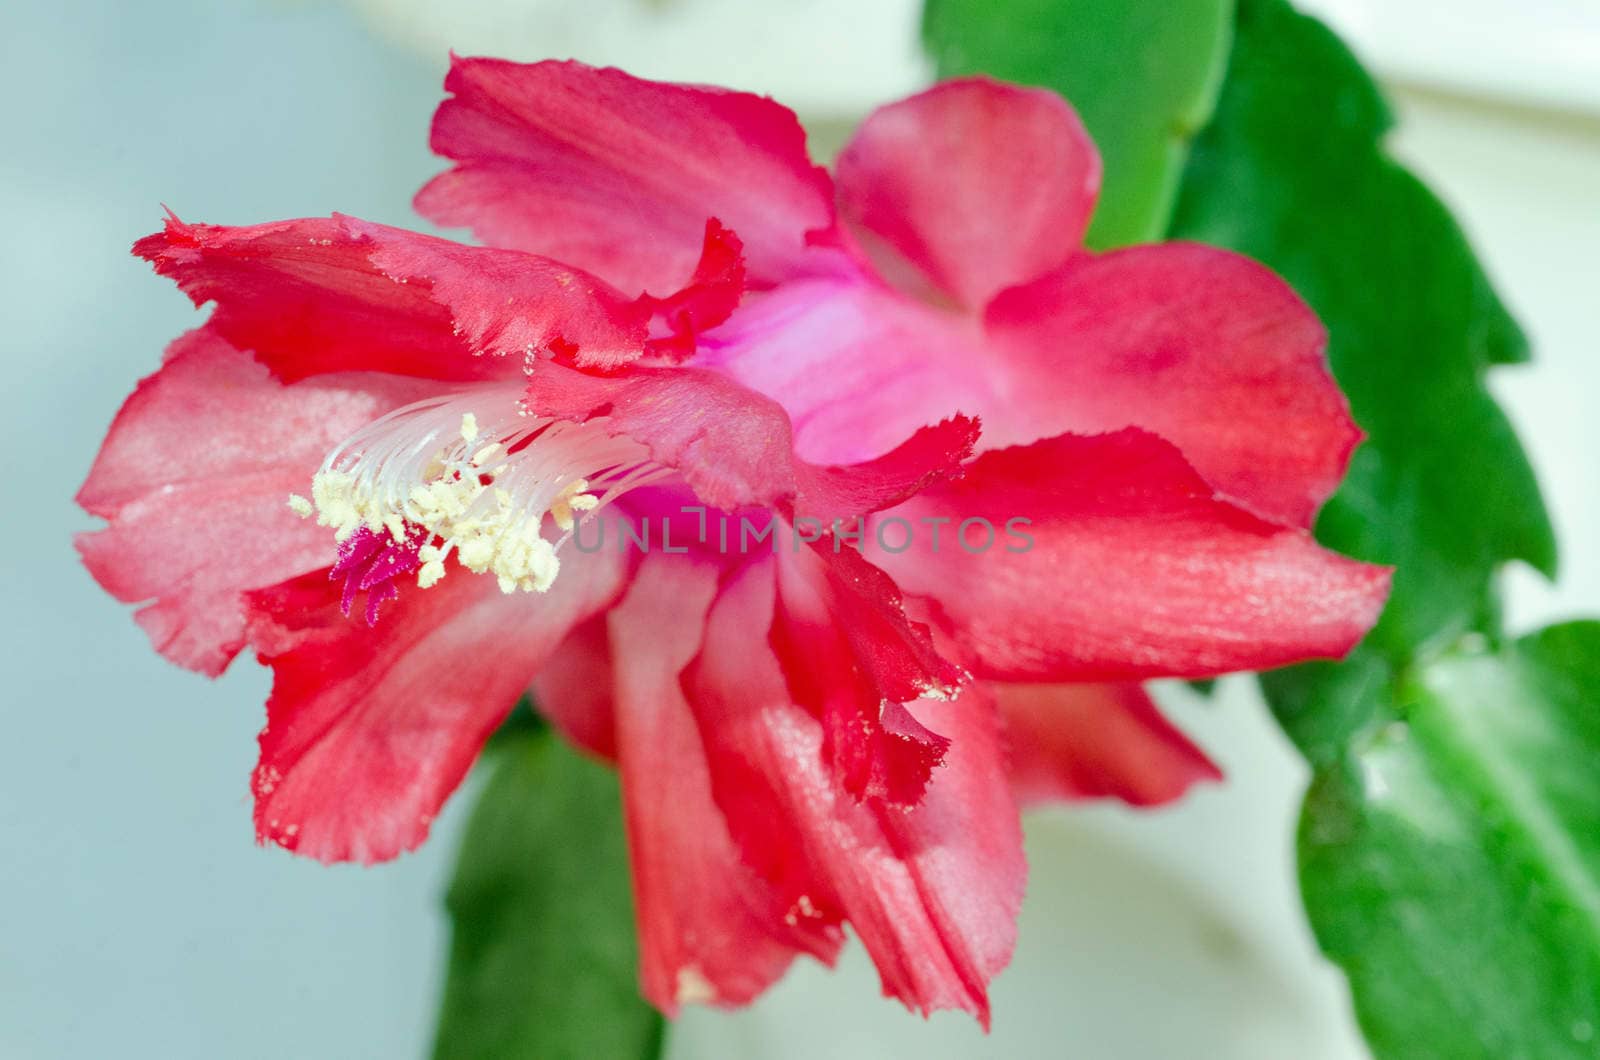 Blooming Red Zygo - Zygocactus Close-up / macro shot